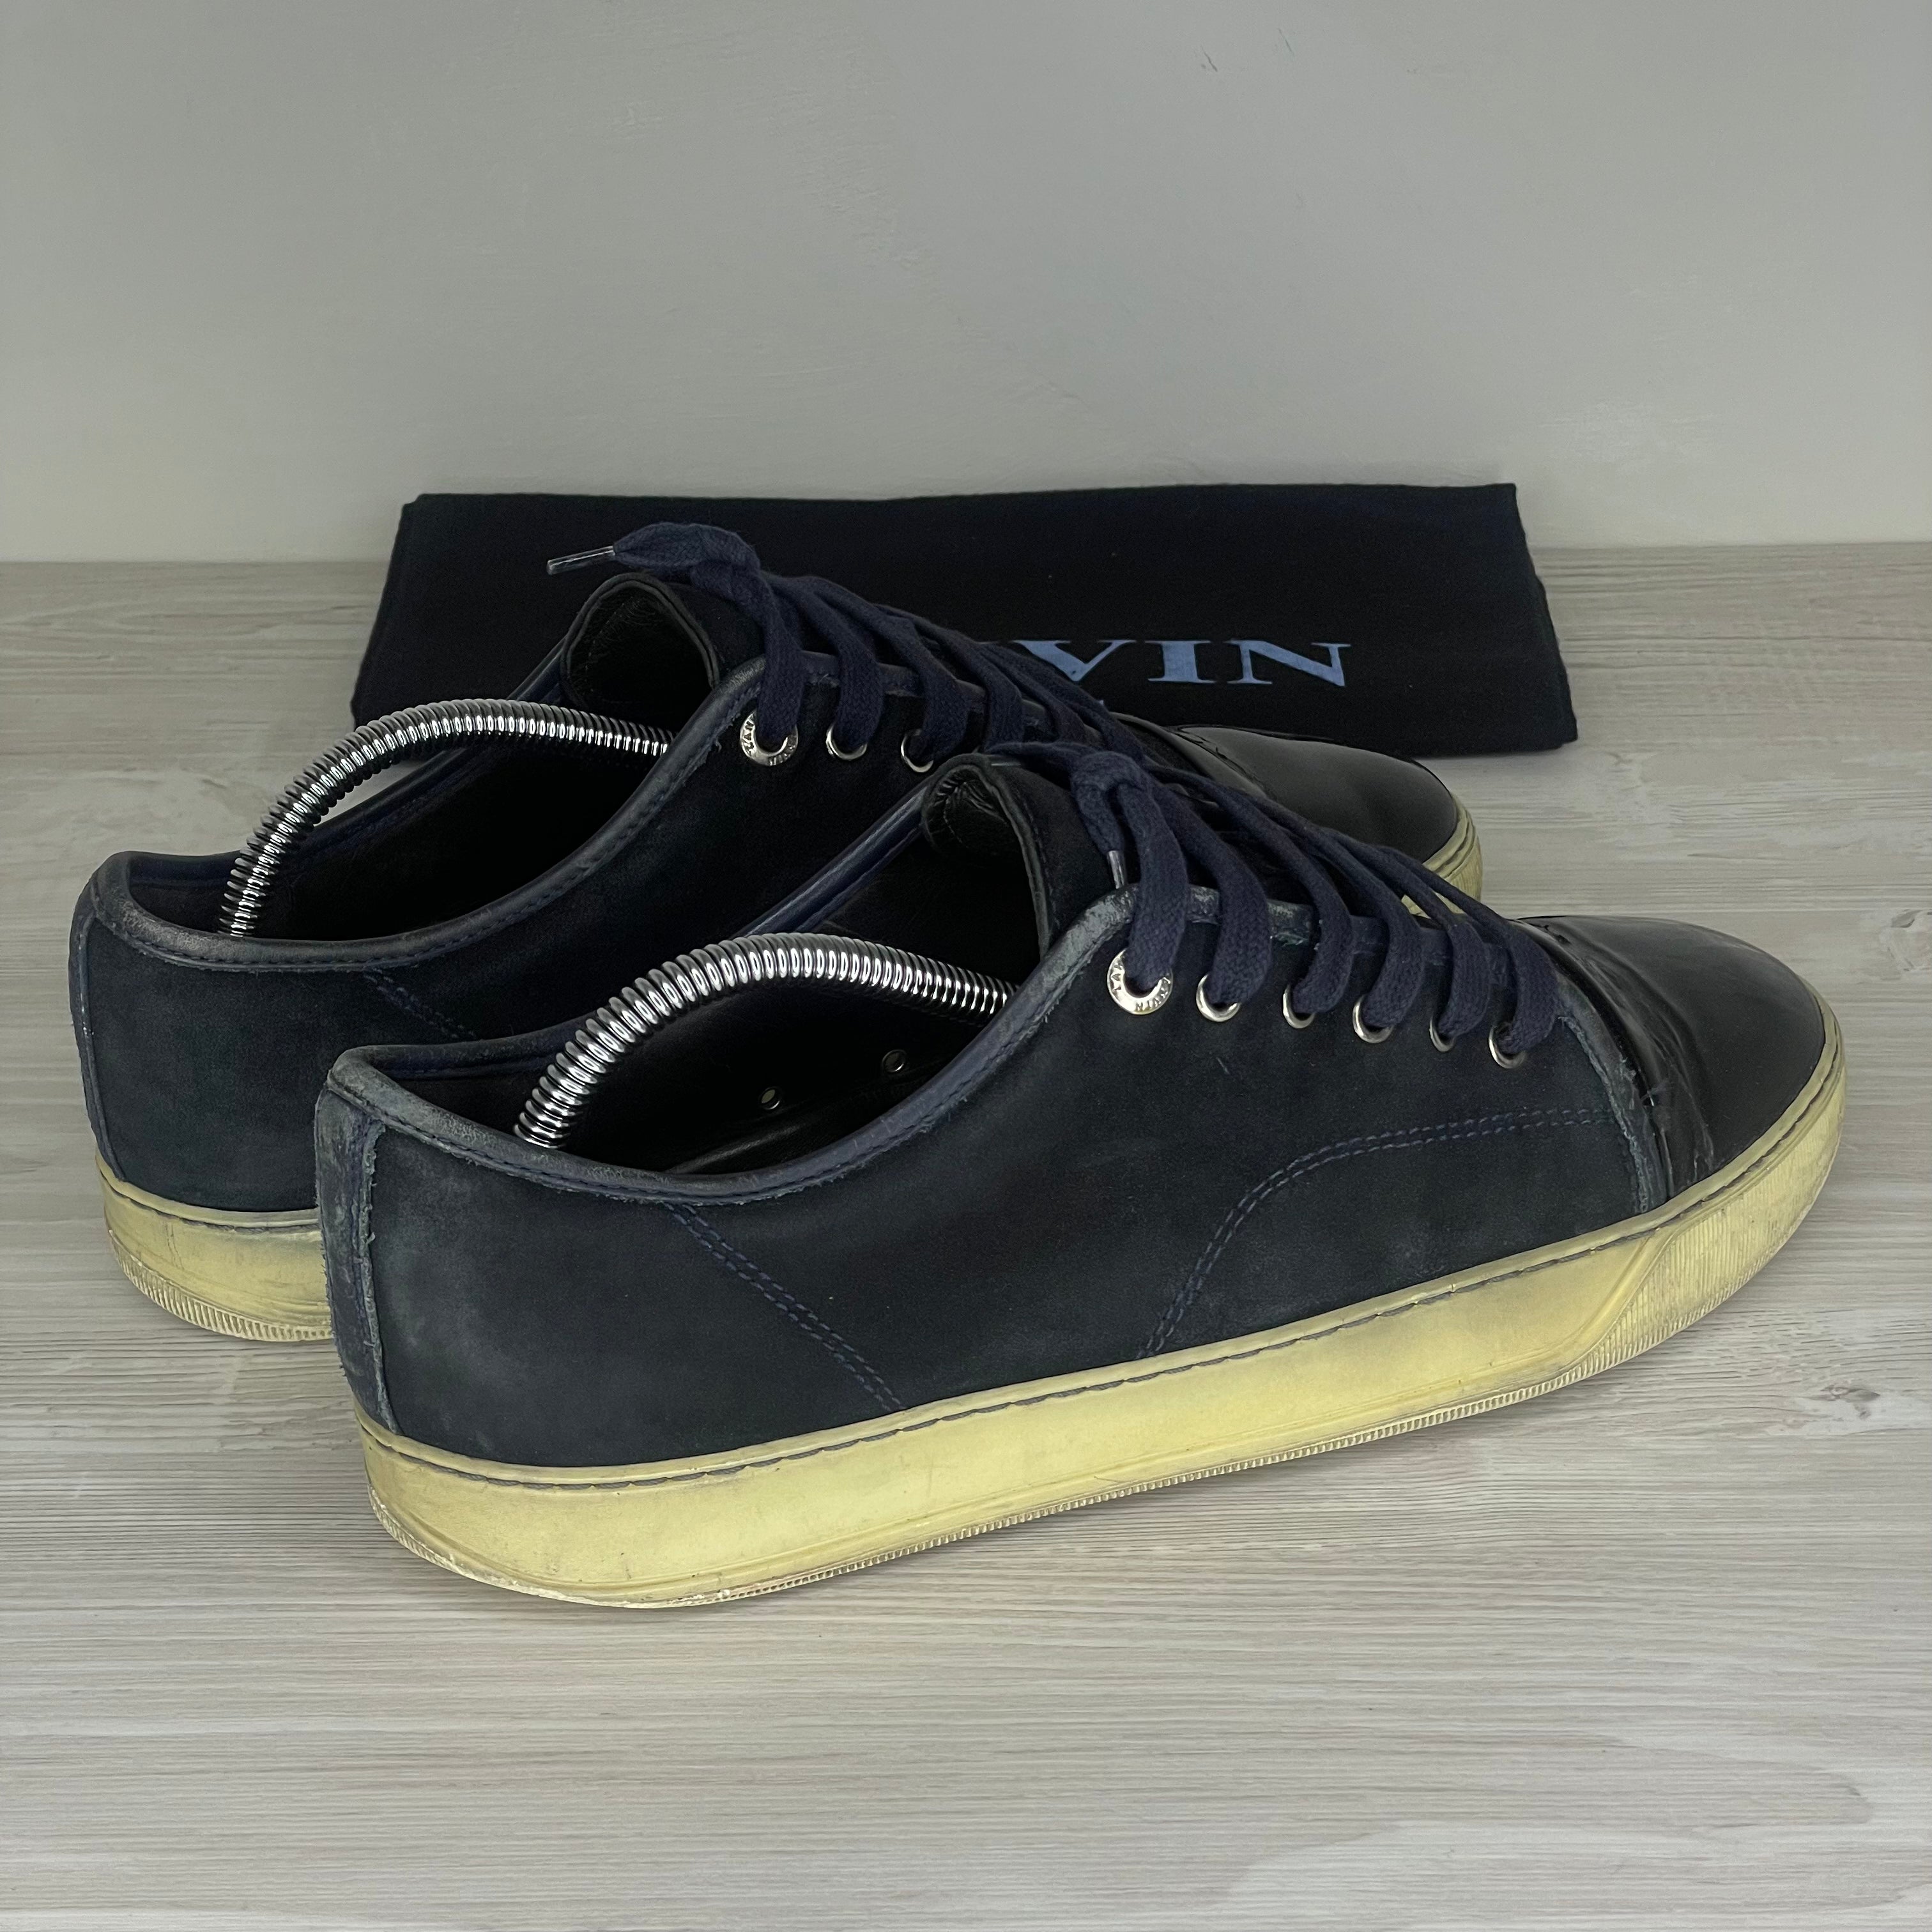 Lanvin Sneakers, 'Navy Suede' Lak Toe (42)